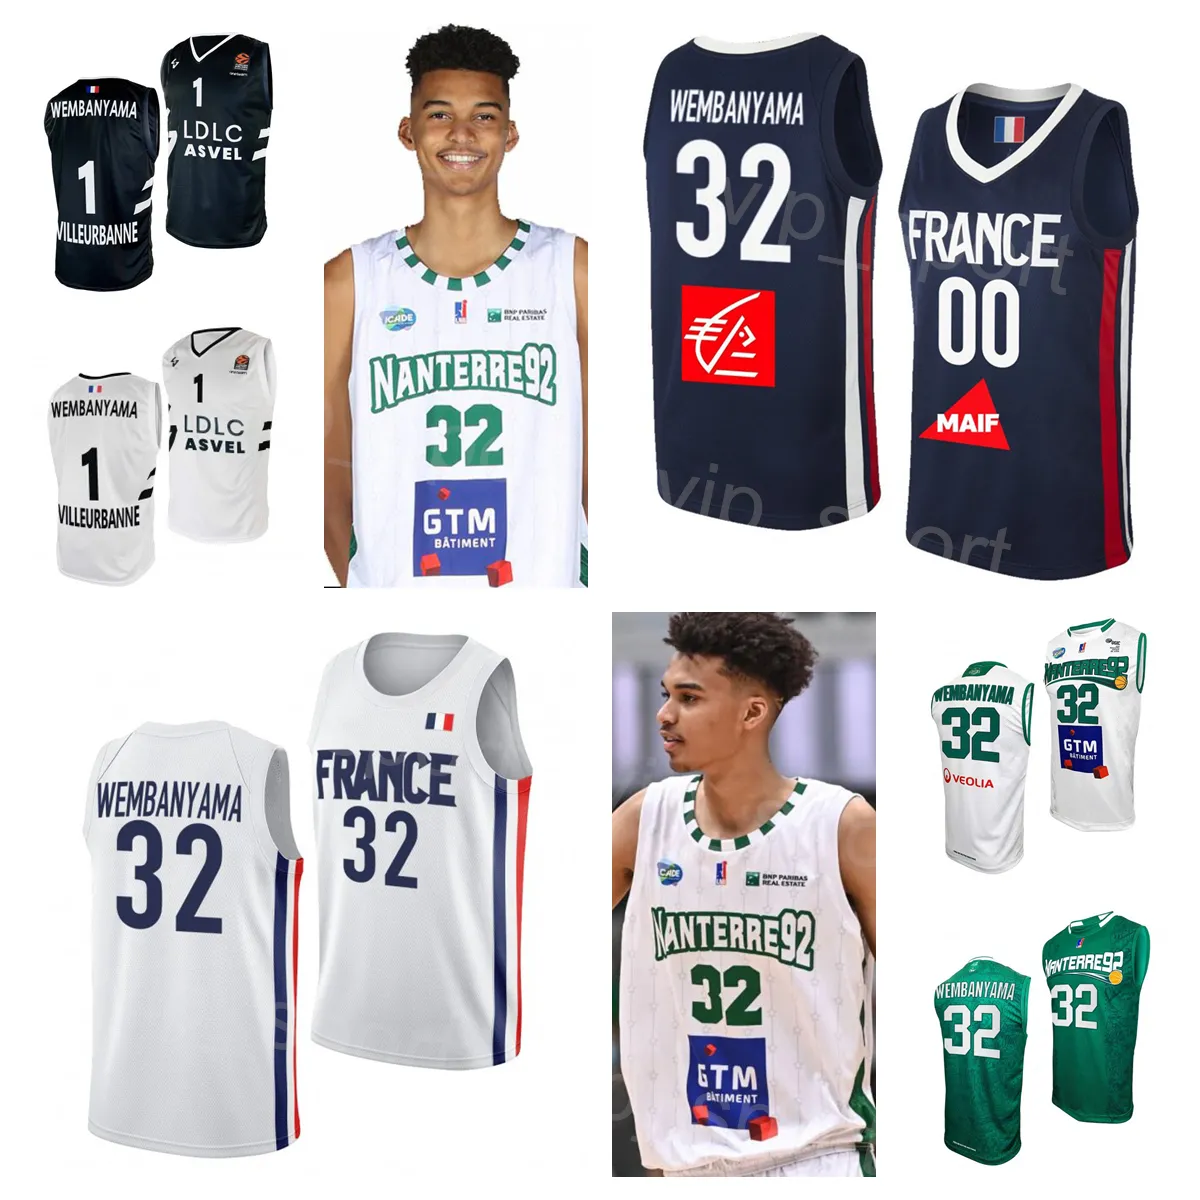 Screen Print Team Maillot Basketball Nanterre 92 Jersey 32 Victor Wembanyama France U19 National for Sport Fans Breathable Navy Blue White Green Black Good/high